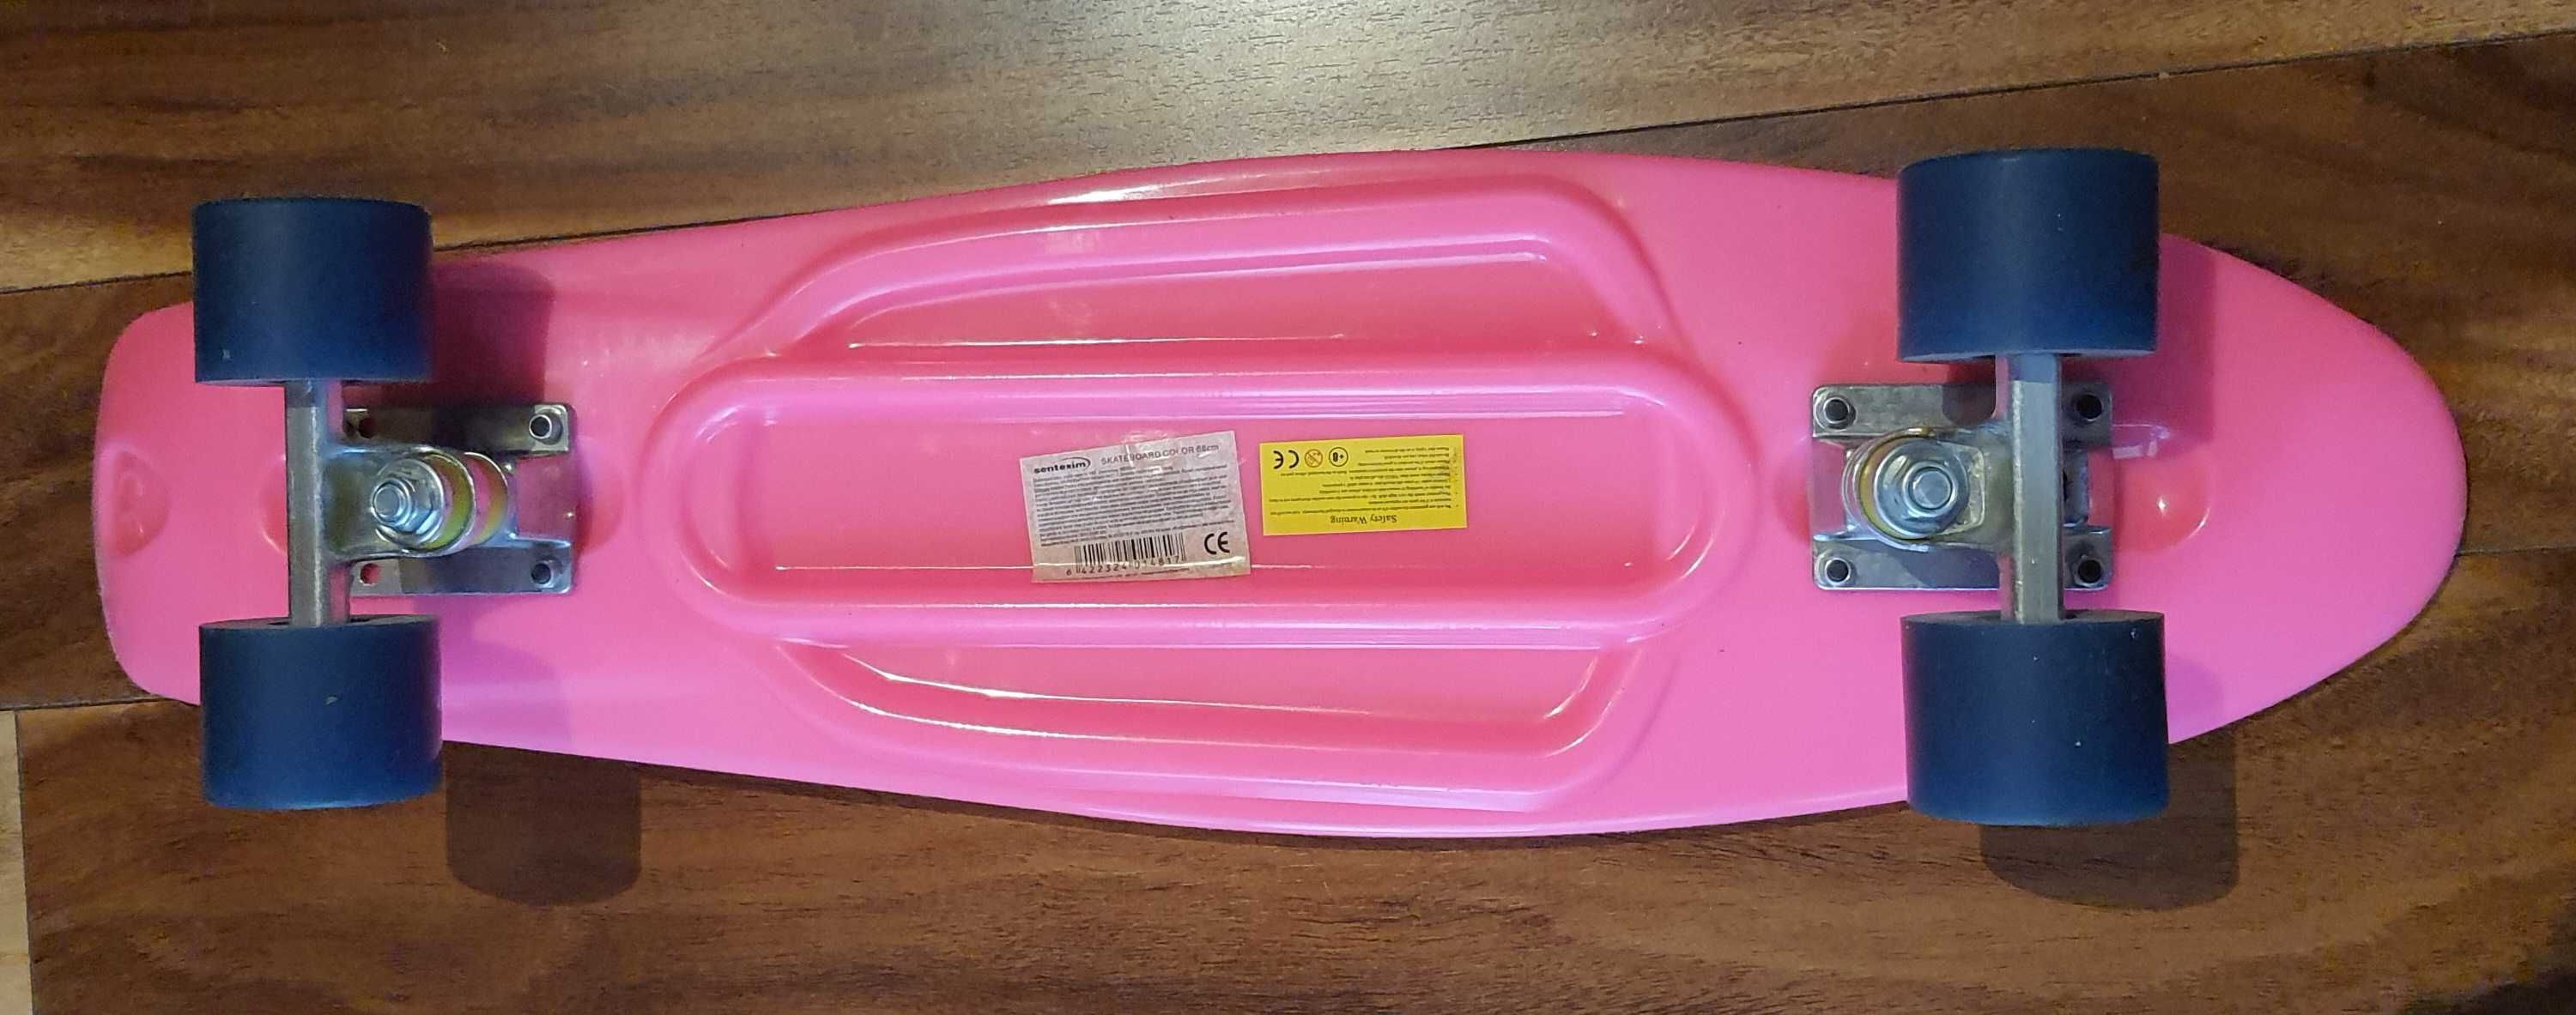 Skateboard roz 68 x 20 cm material ABS rulmenti ABEC 7 sasiu aluminiu